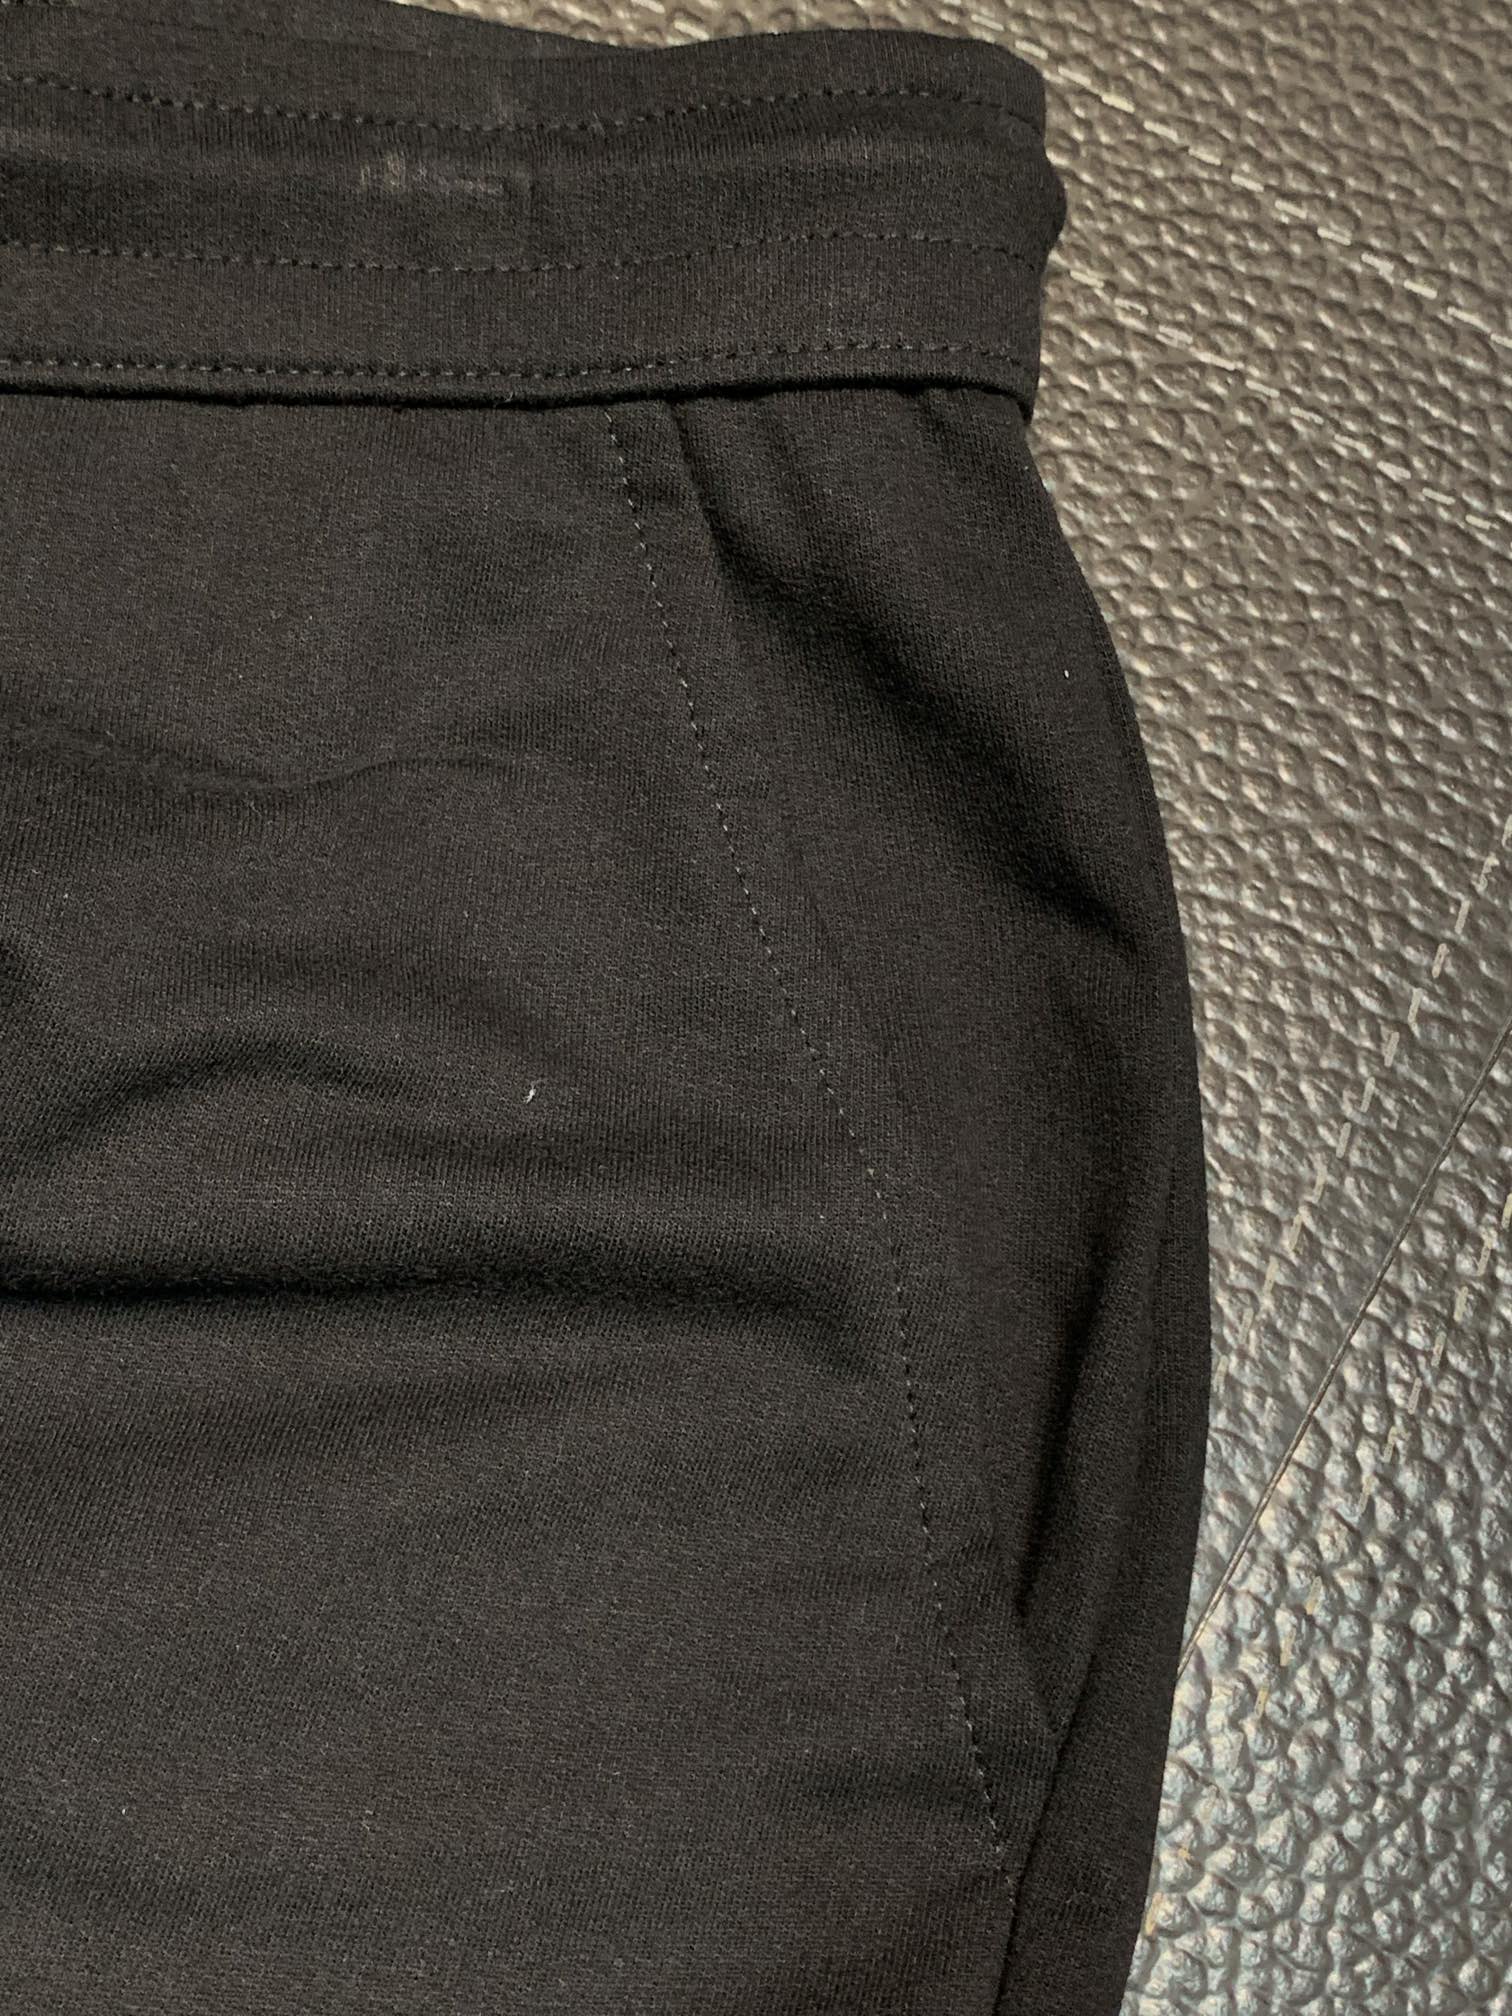 Moncler蒙口独家专供新款休闲裤长裤高端版本！专柜定制面料透气舒适度高细节无可挑剔品牌元素设计理念体